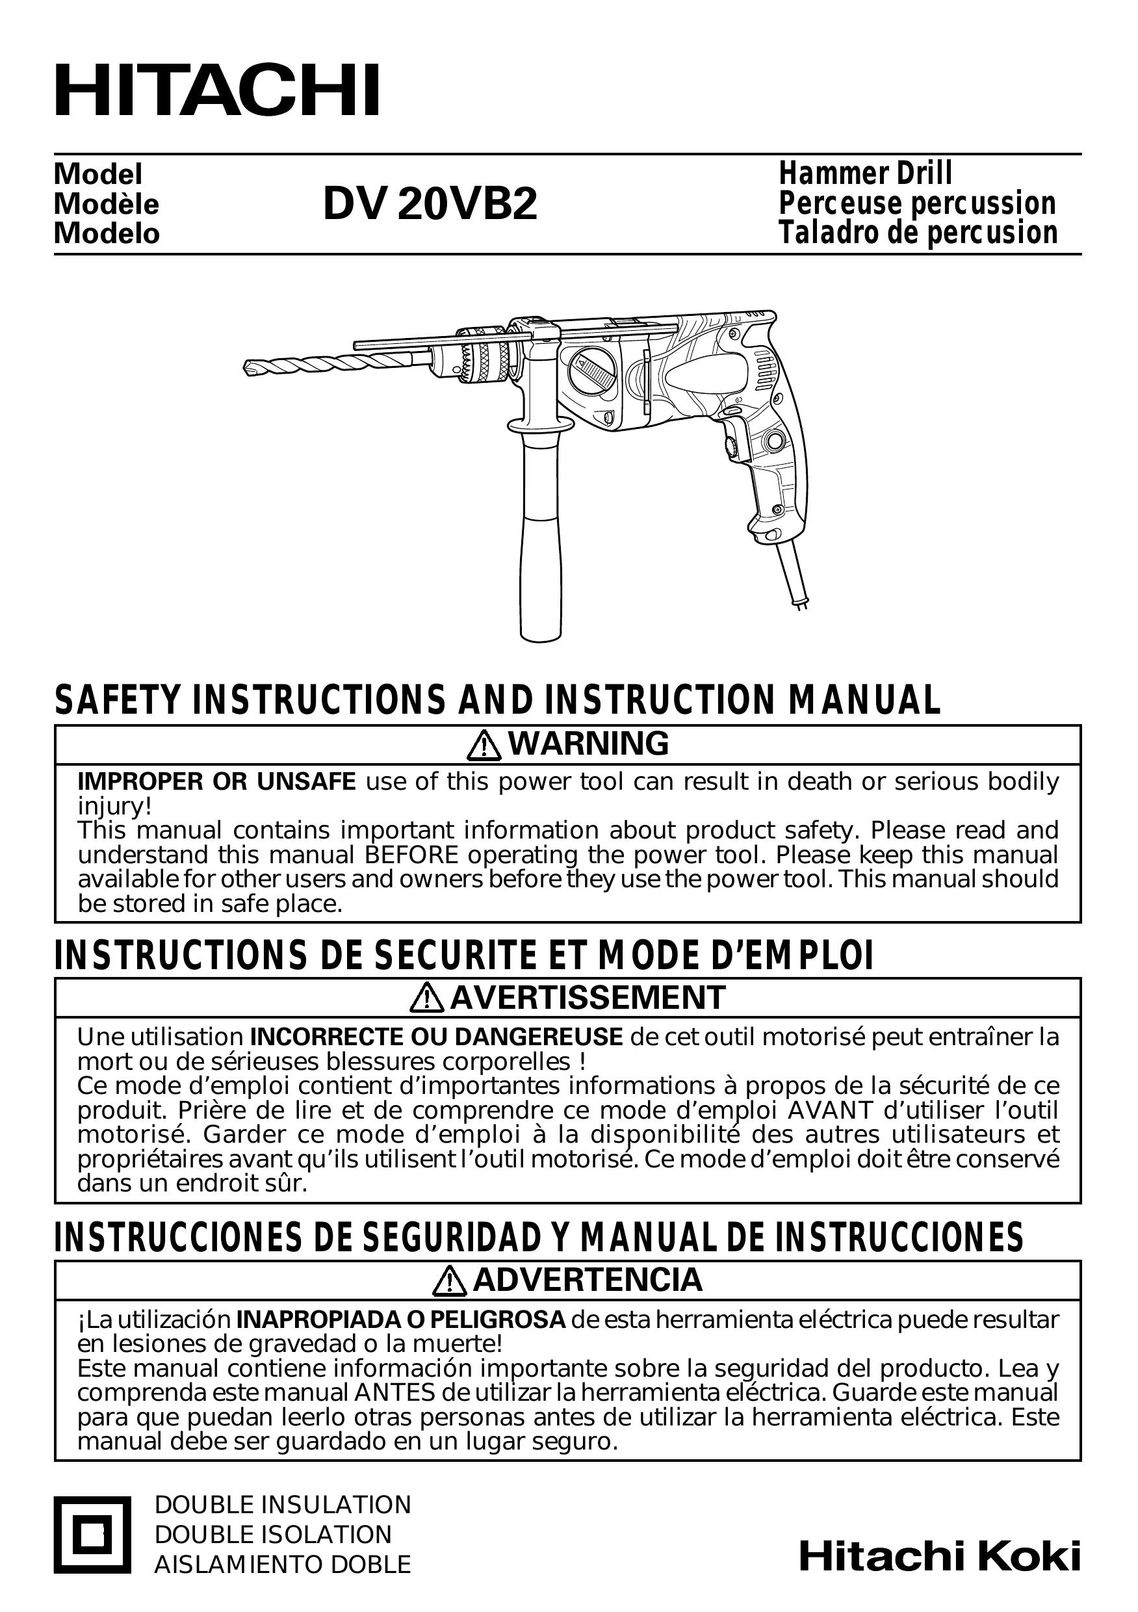 Hitachi Koki USA DV 20VB2 Cordless Drill User Manual